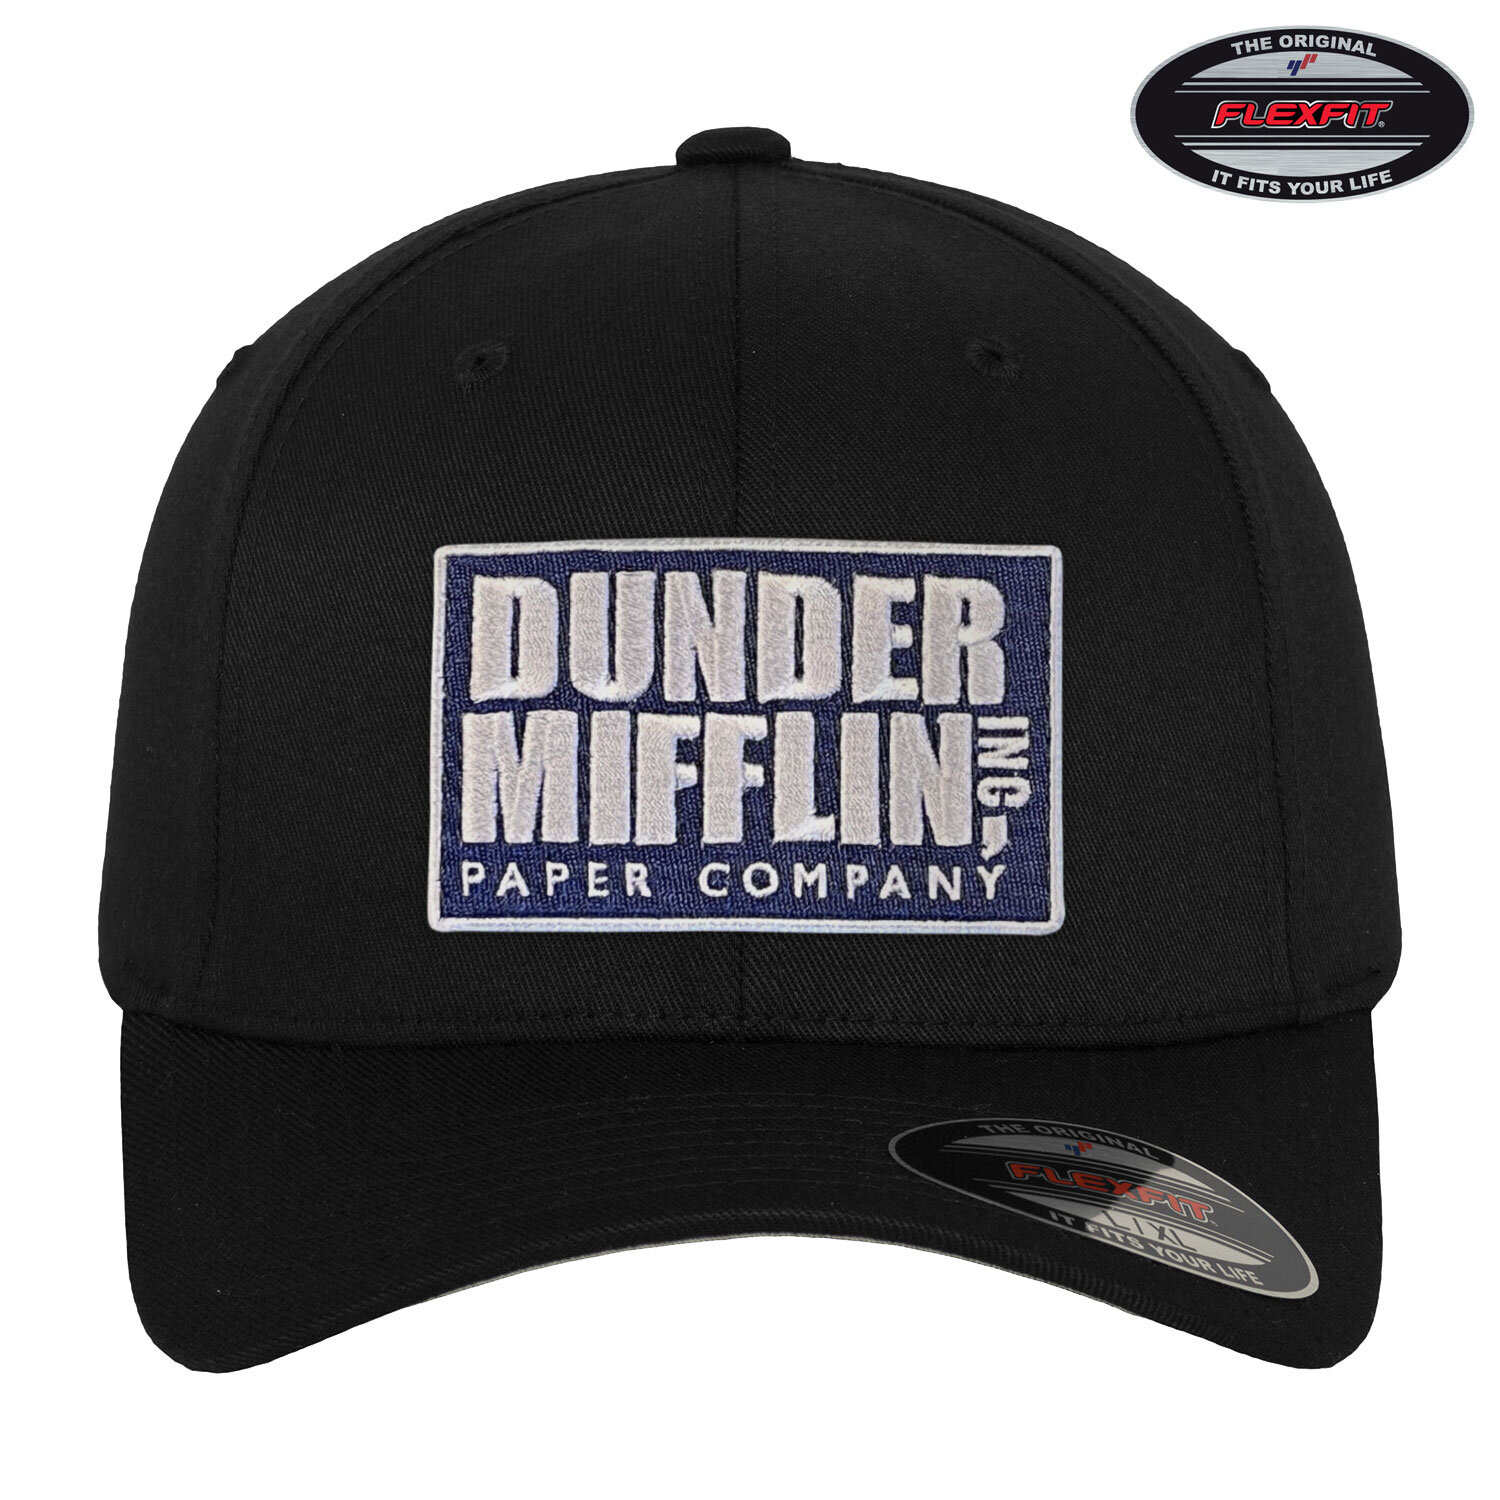 The Office - Dunder Mifflin Inc Coffee Mug - Shirtstore